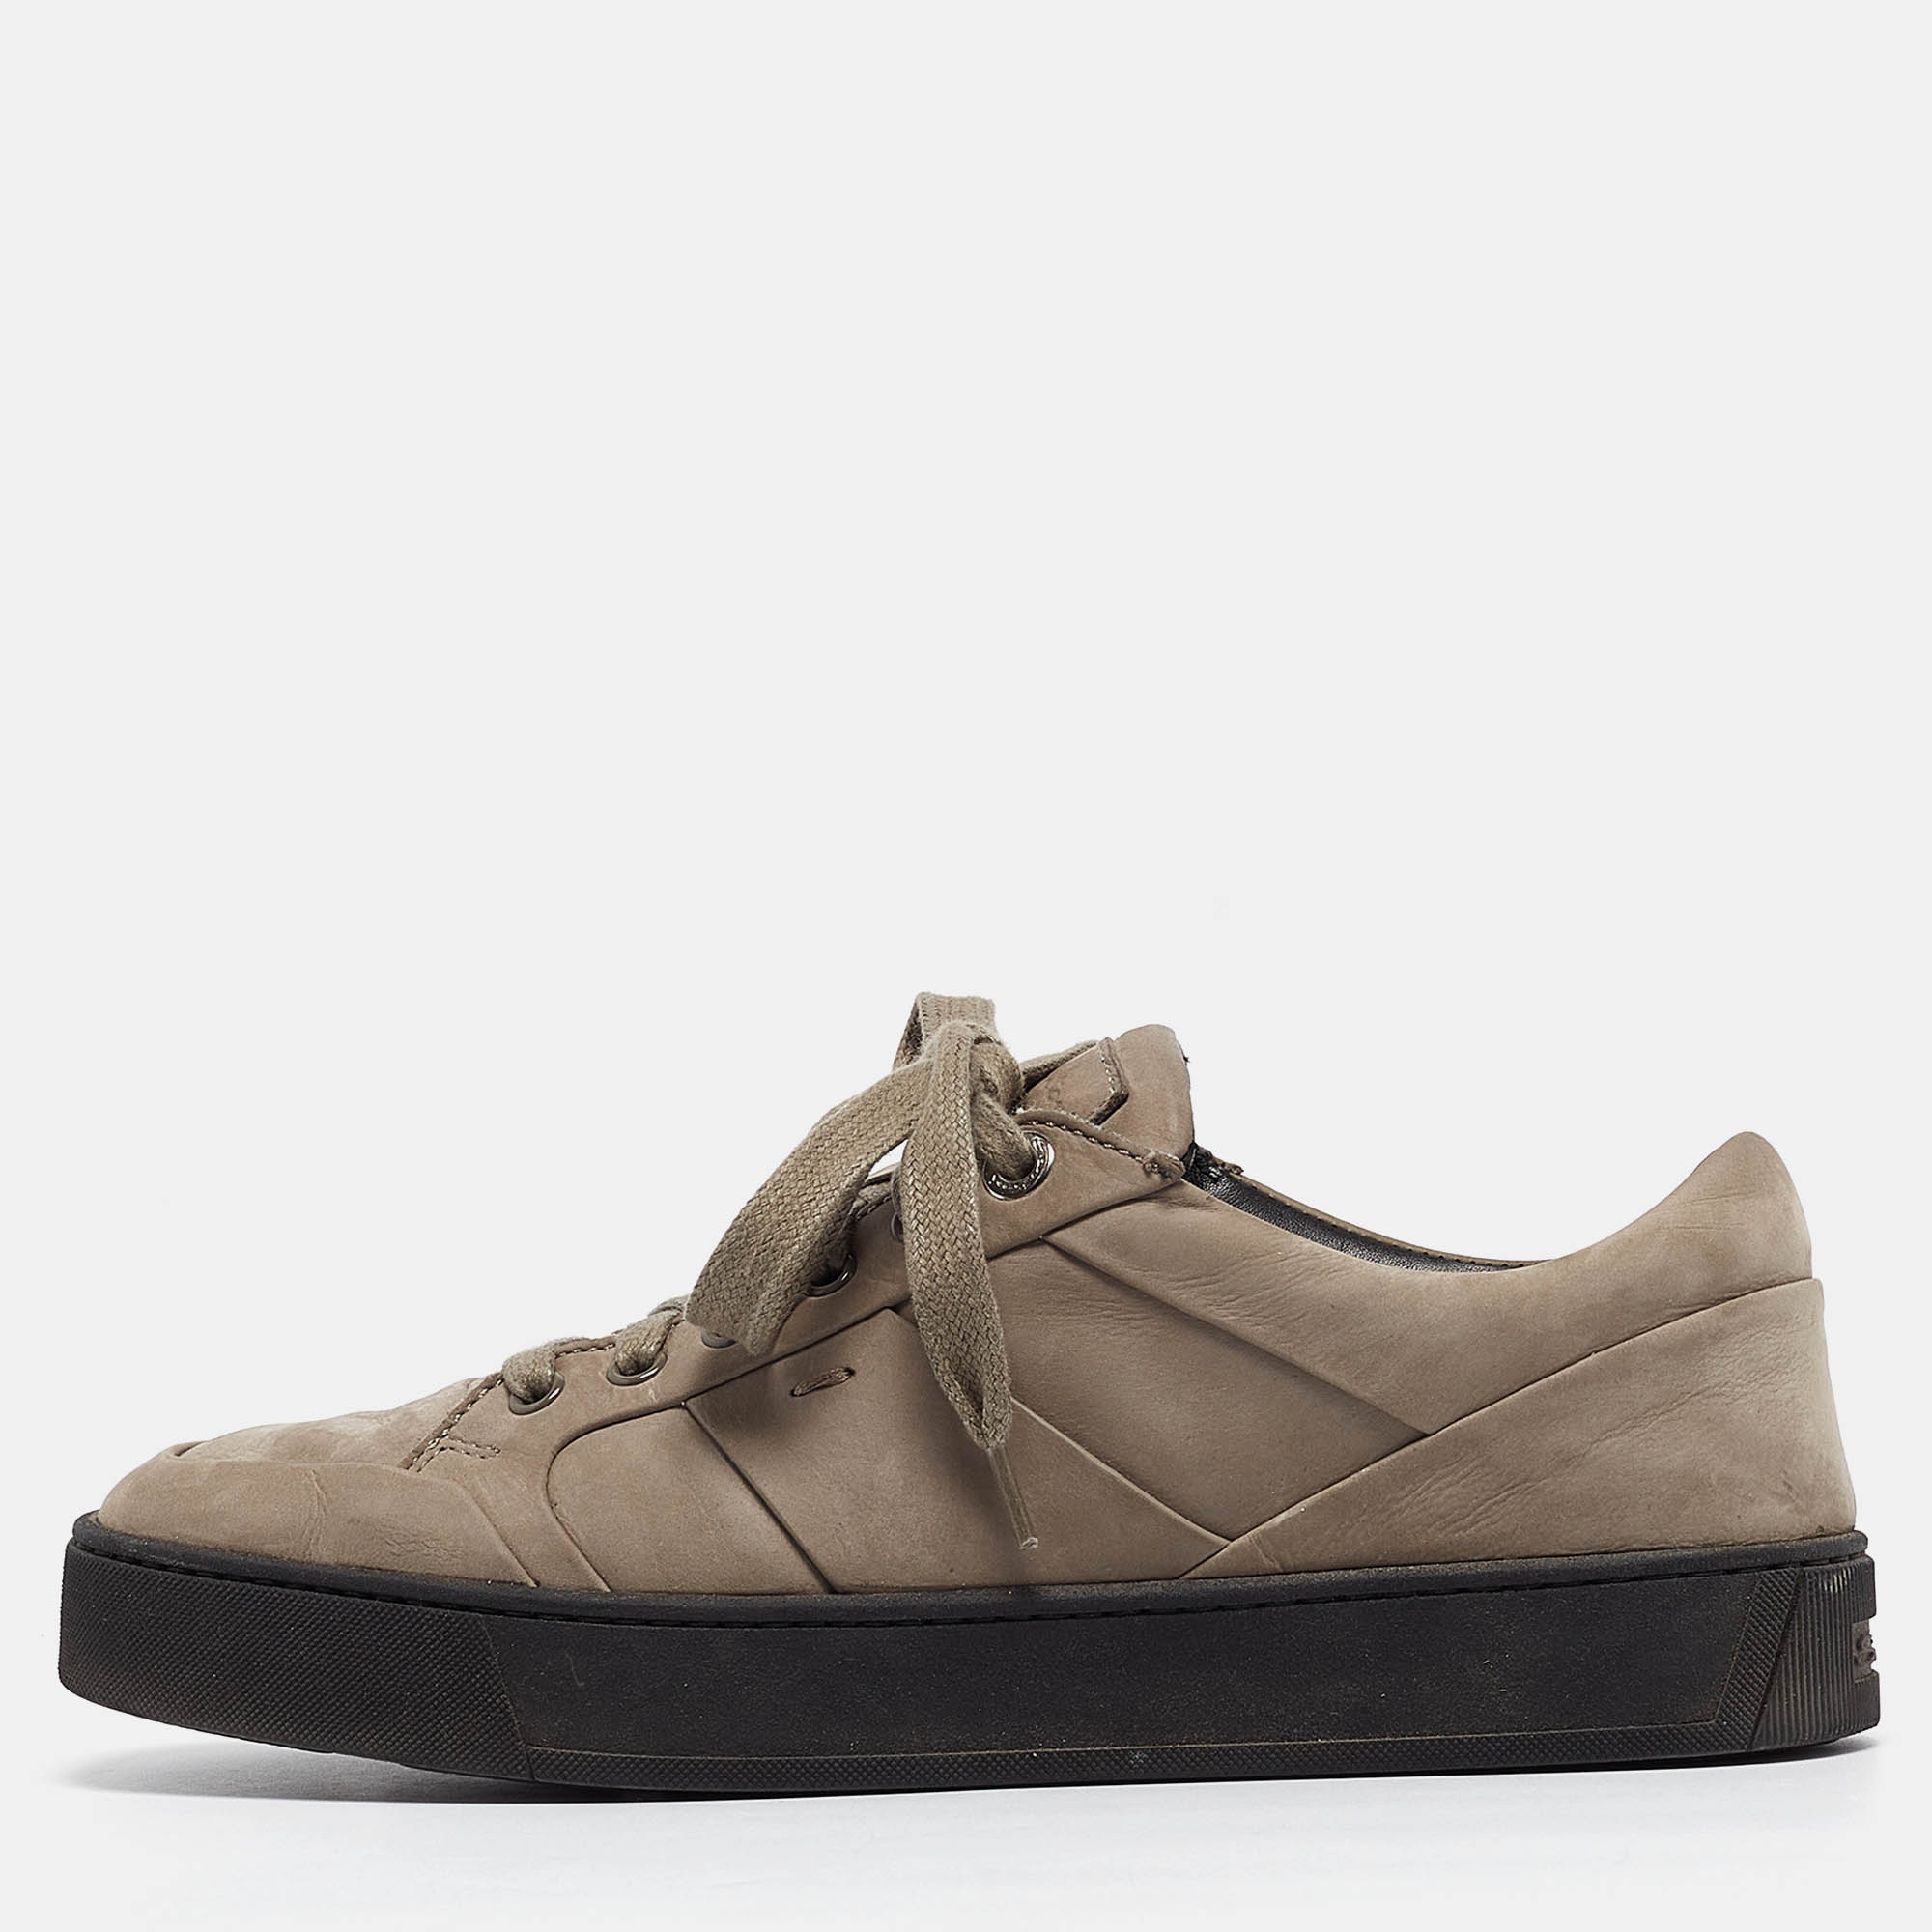 Santoni grey nubuck leather low top sneakers size 40